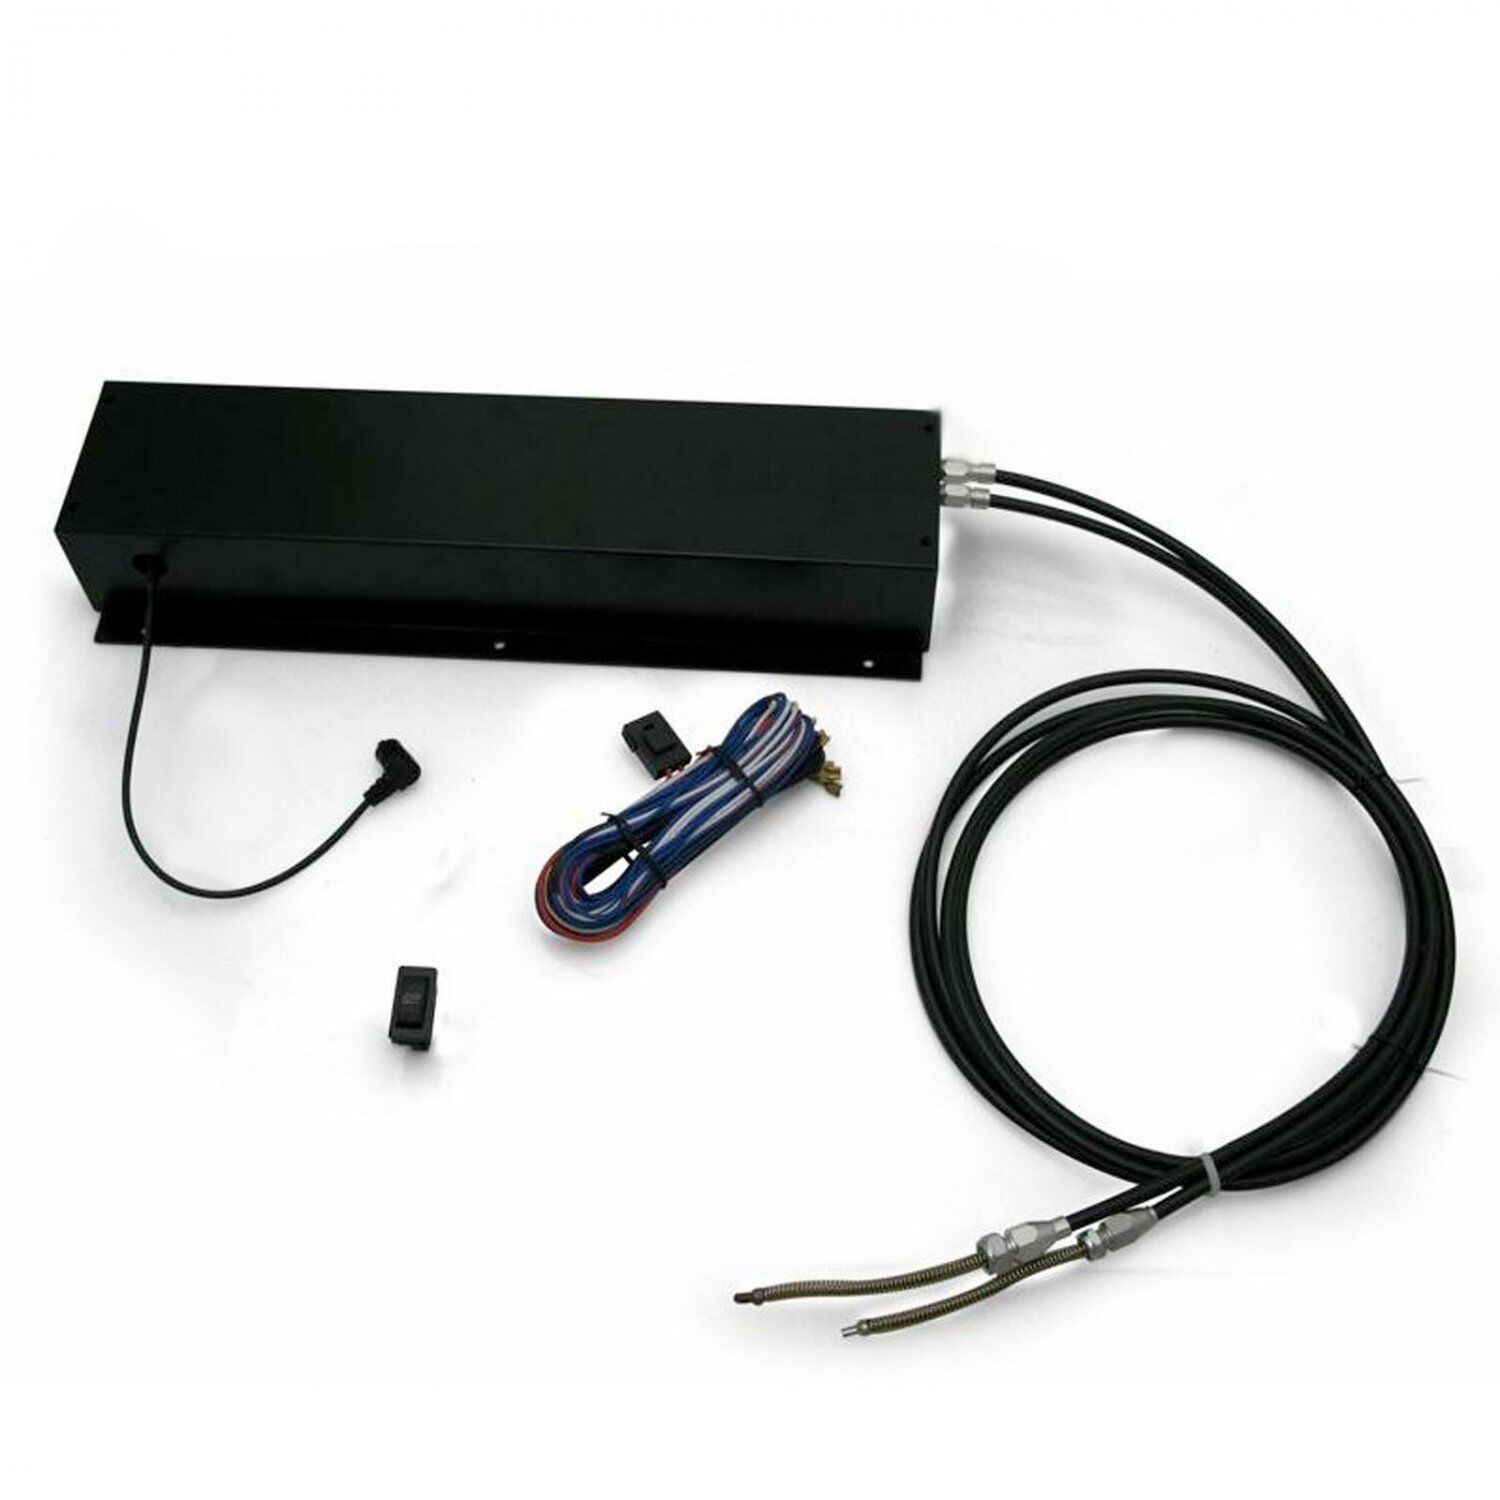 Push-Button Electrical Emergency Brake Kit with Cables parking ebrake gasser ez